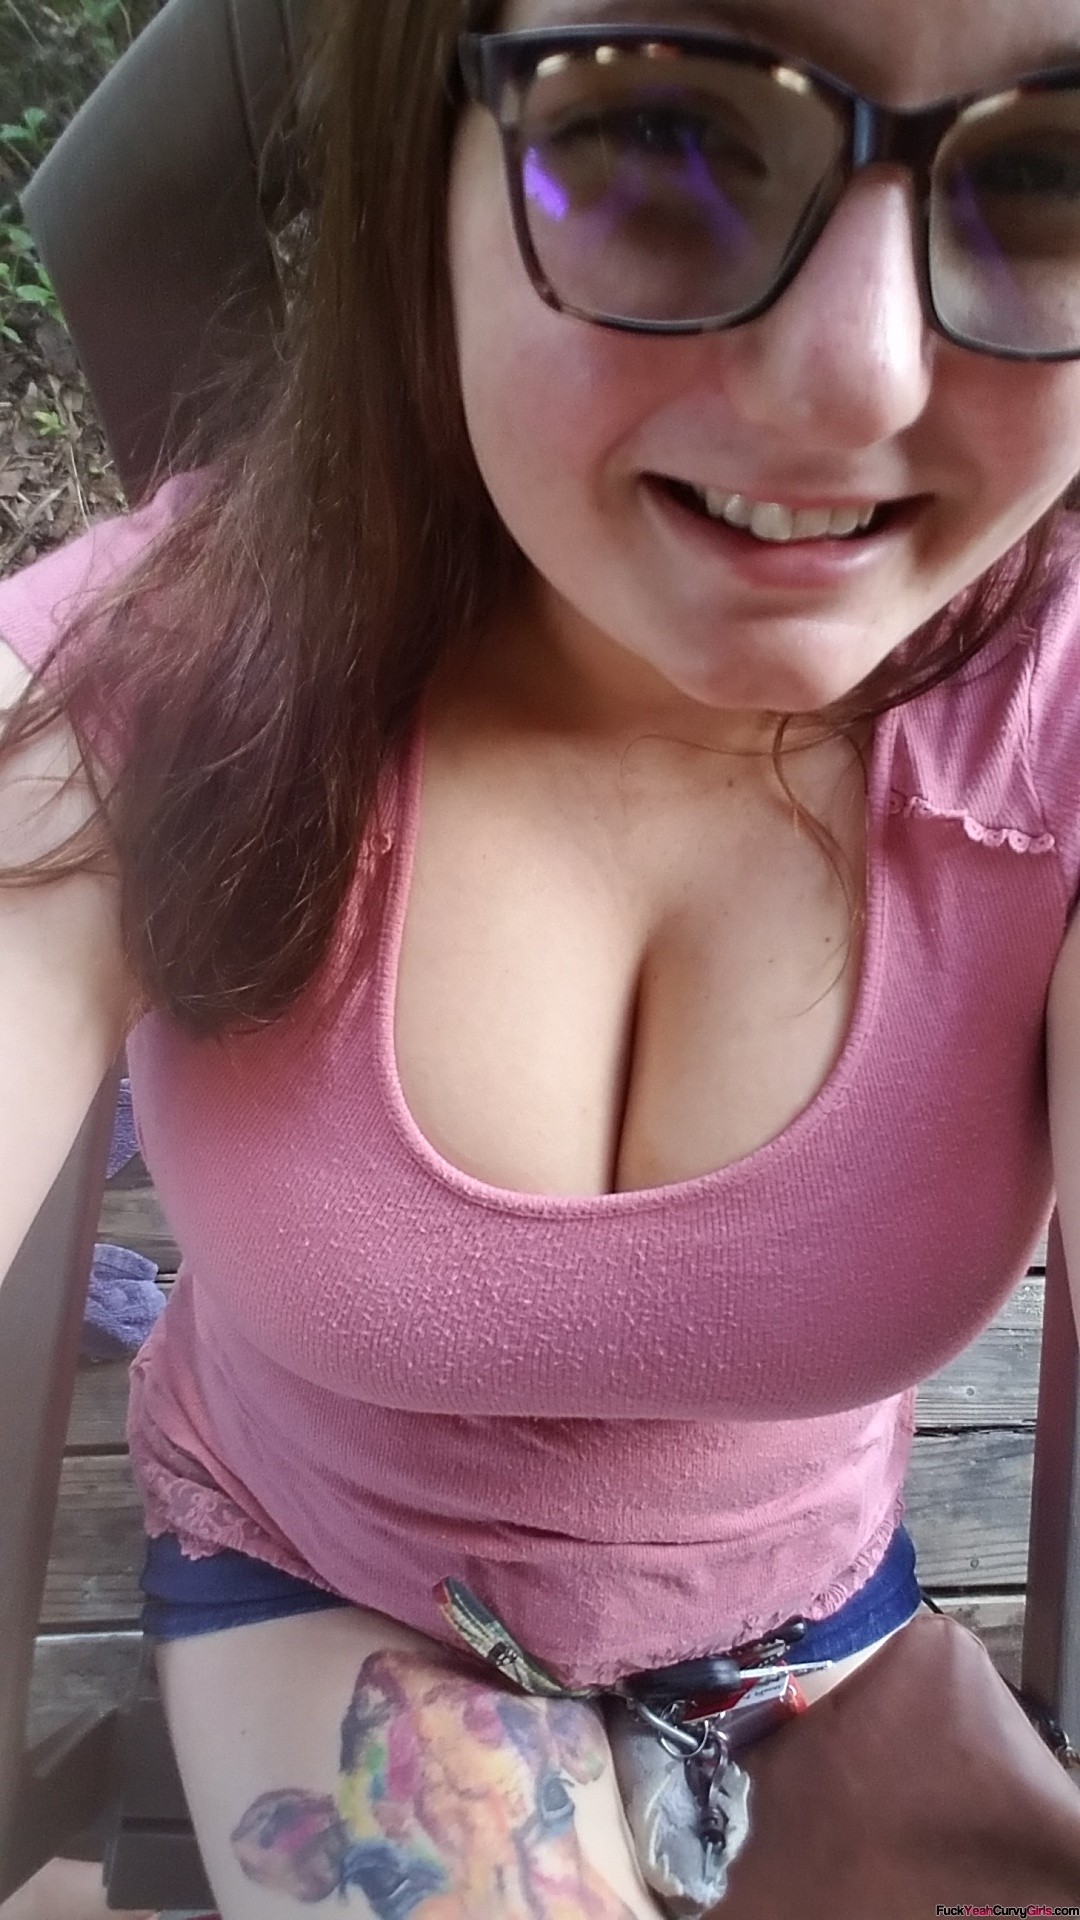 boobs cleavage self shot porn video pics